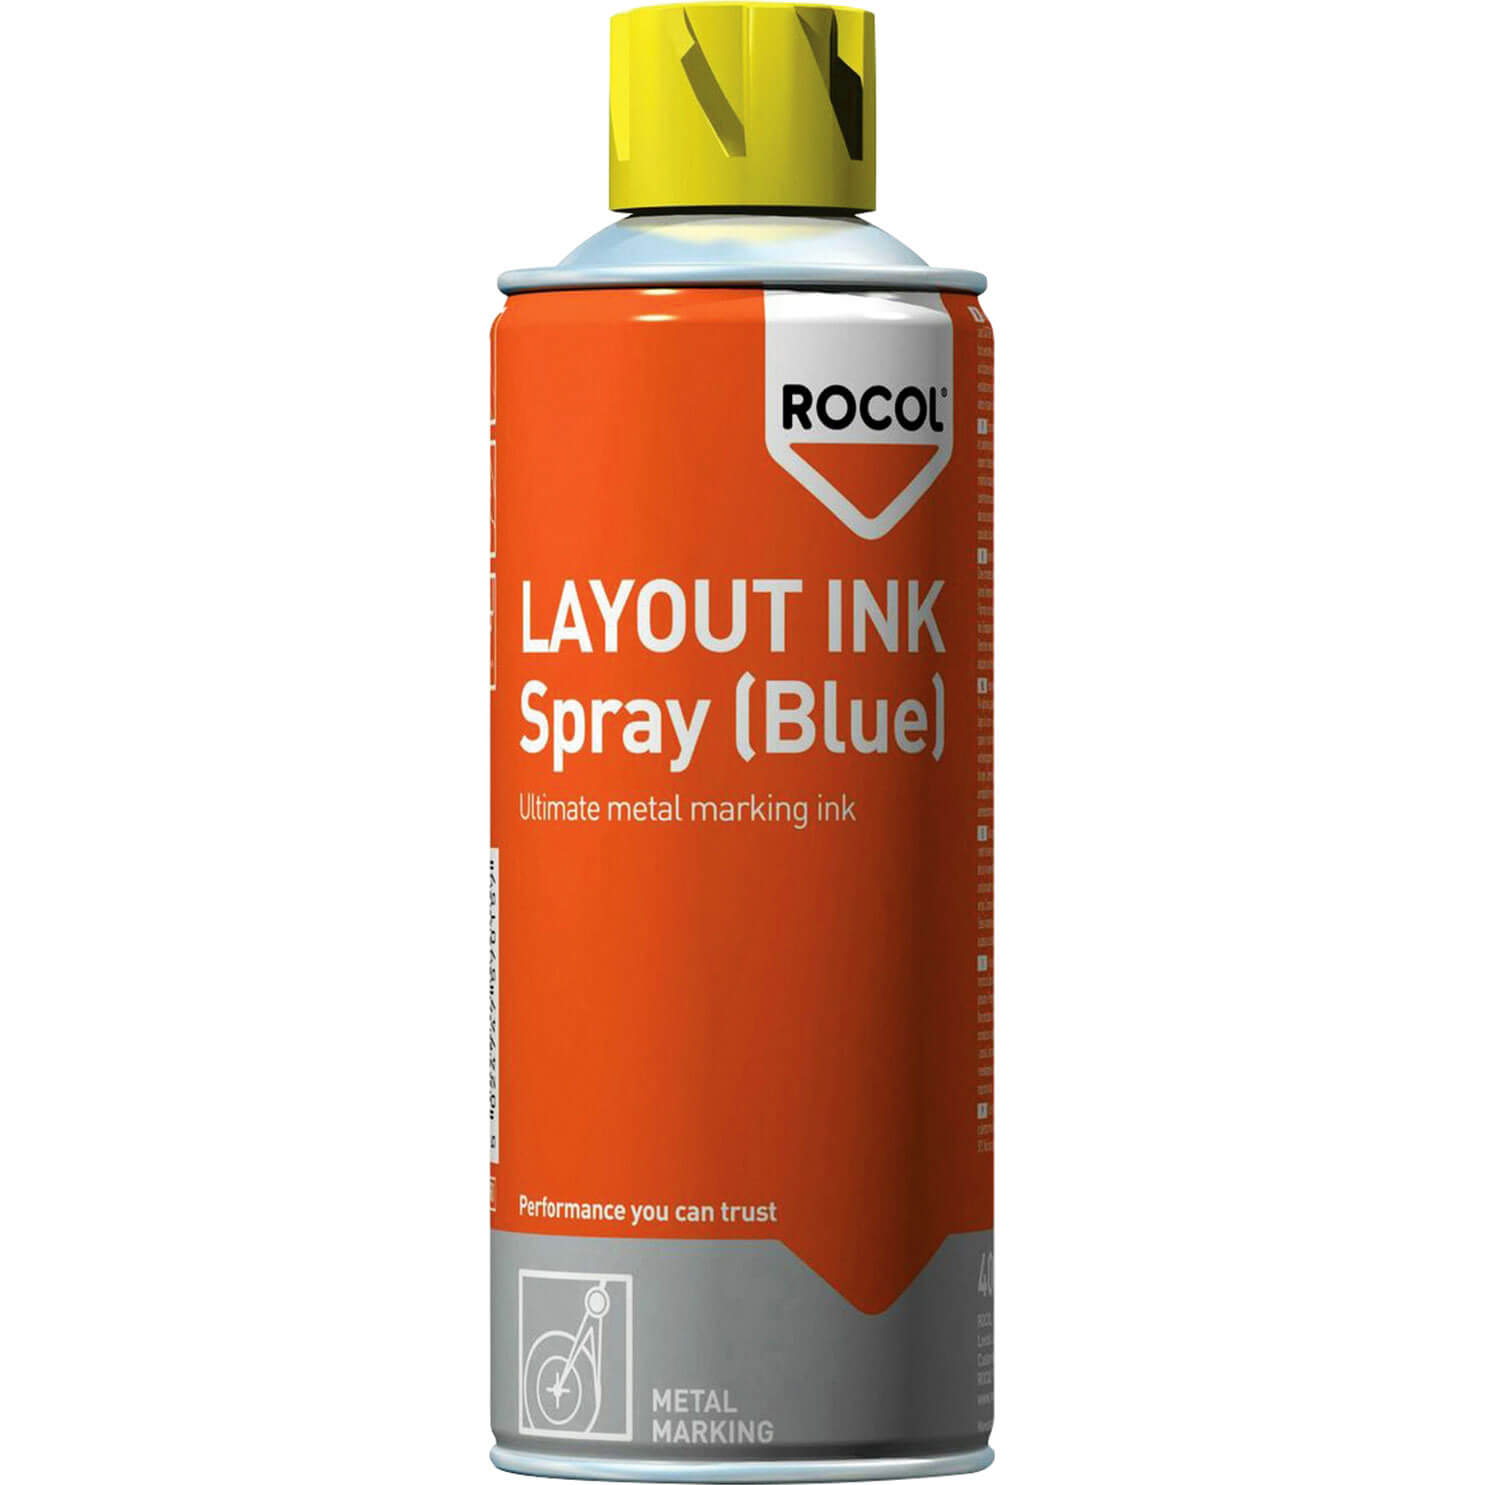 Rocol Layout Ink Spray Blue 300ml